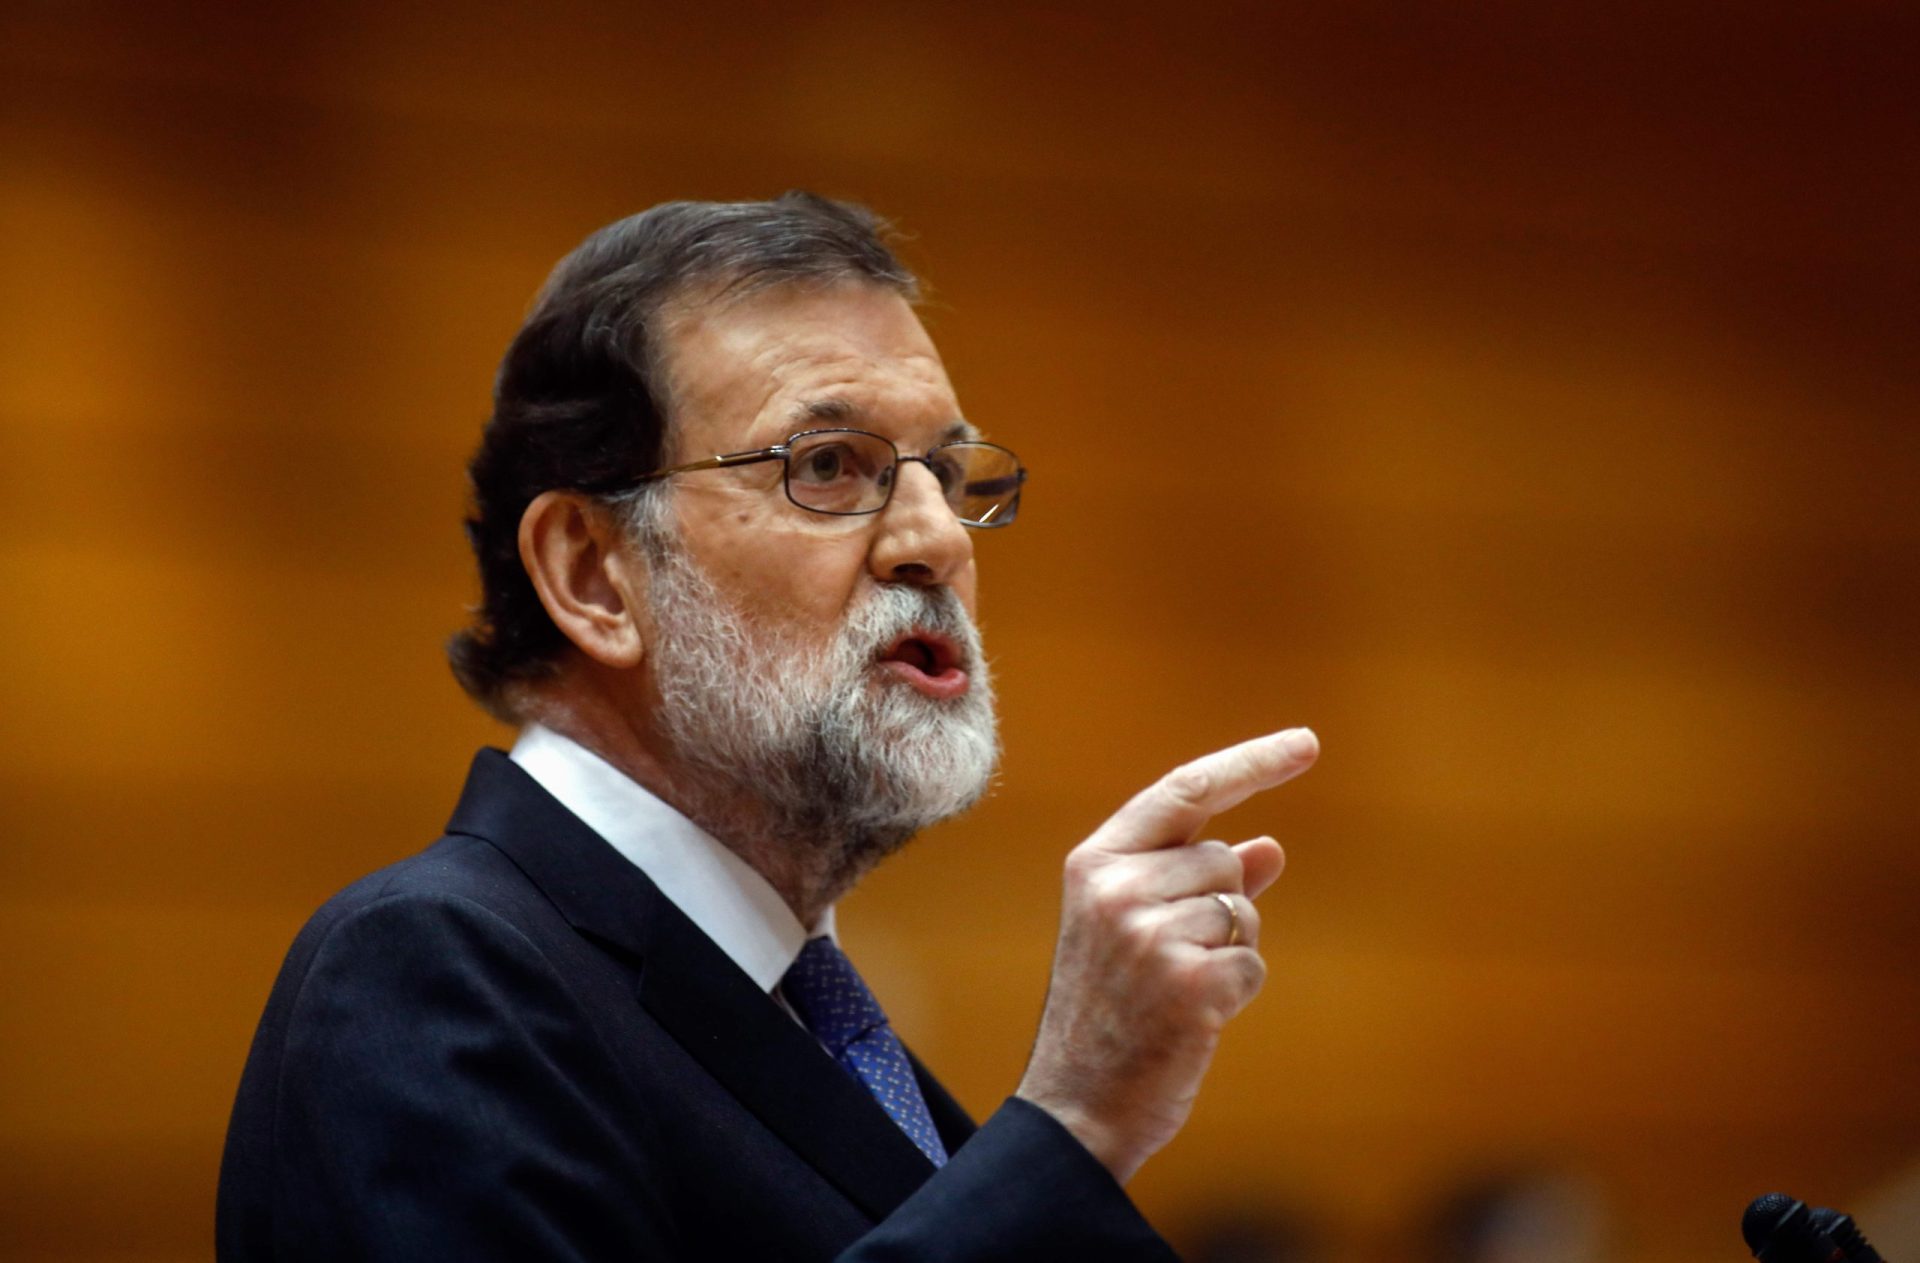 Mariano Rajoy pede &#8220;tranquilidade&#8221;